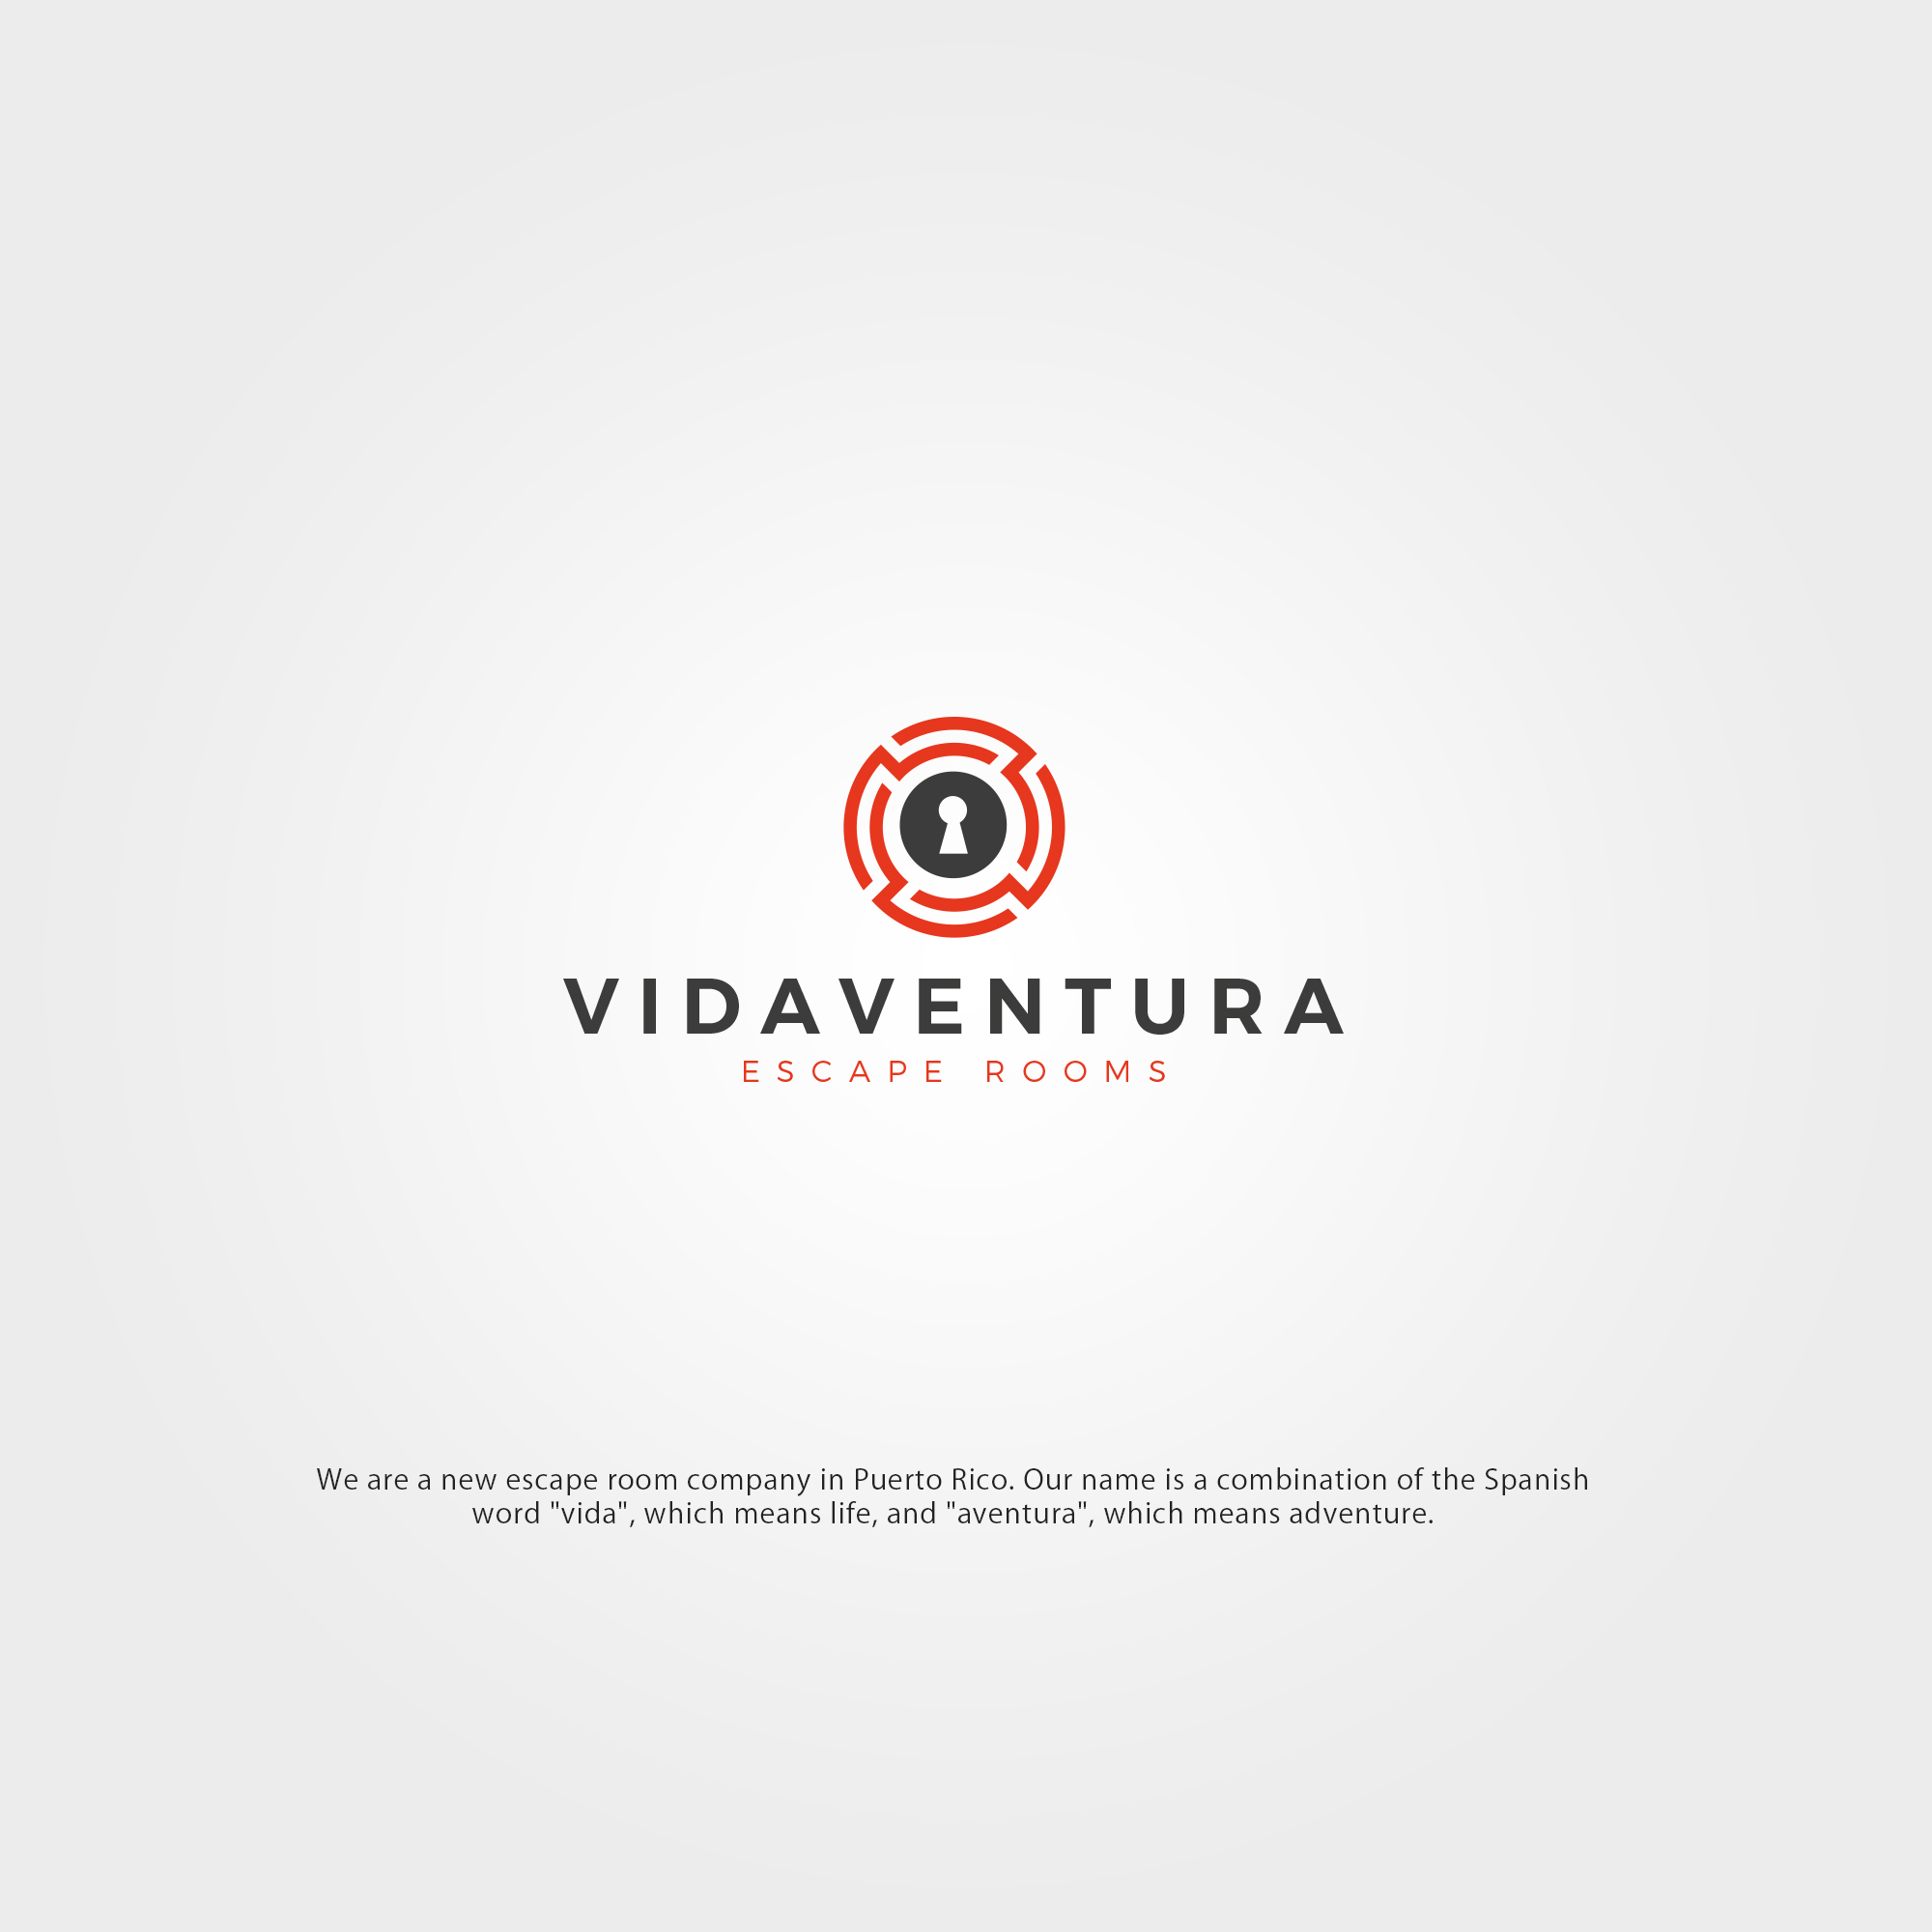 Logo Design entry 1705220 submitted by MartenVisser to the Logo Design for Vidaventura Escape Rooms run by montecristo73